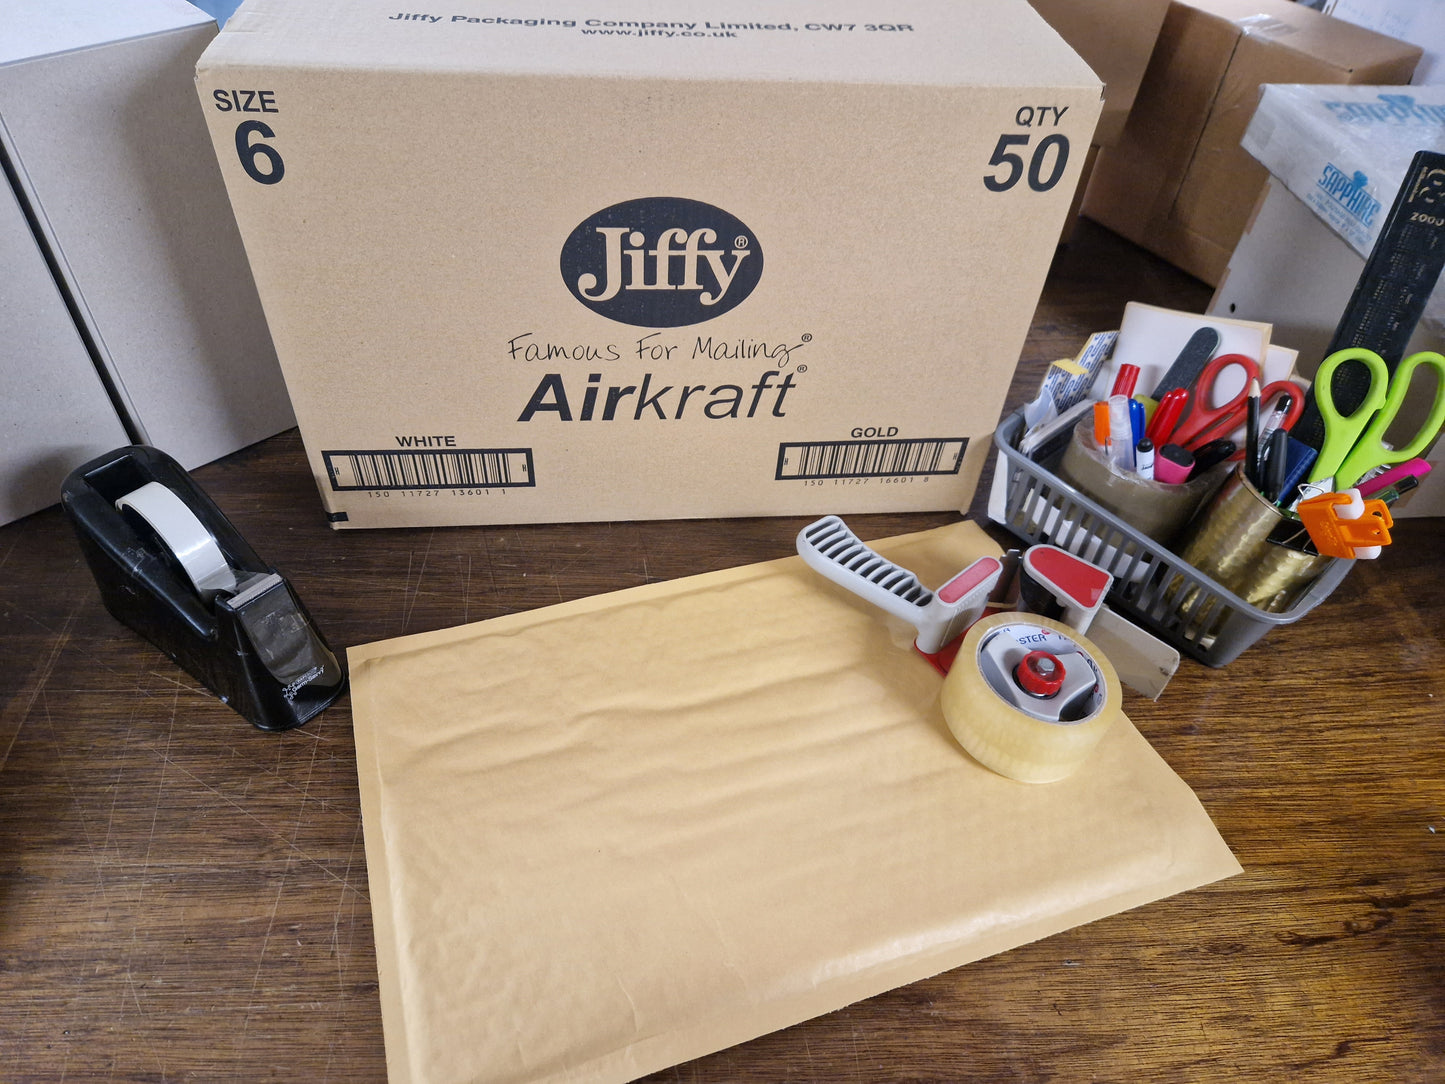 Box of Jiffy Airkraft JL6 from Jiffy Envelopes